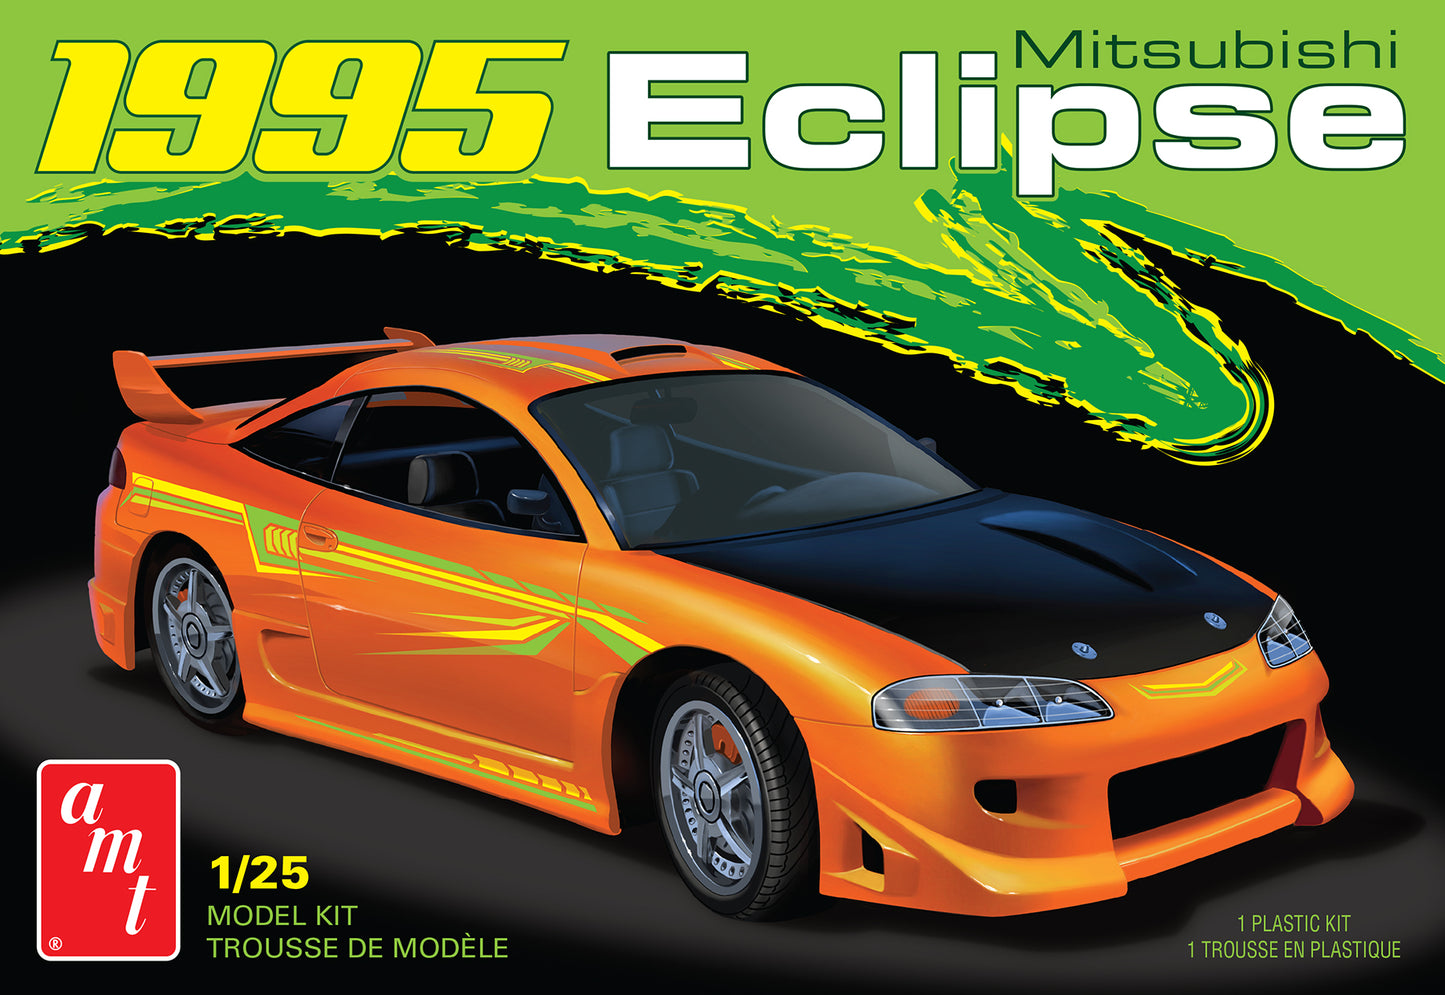 1/25 1995 Mitsubishi Eclipse model kit